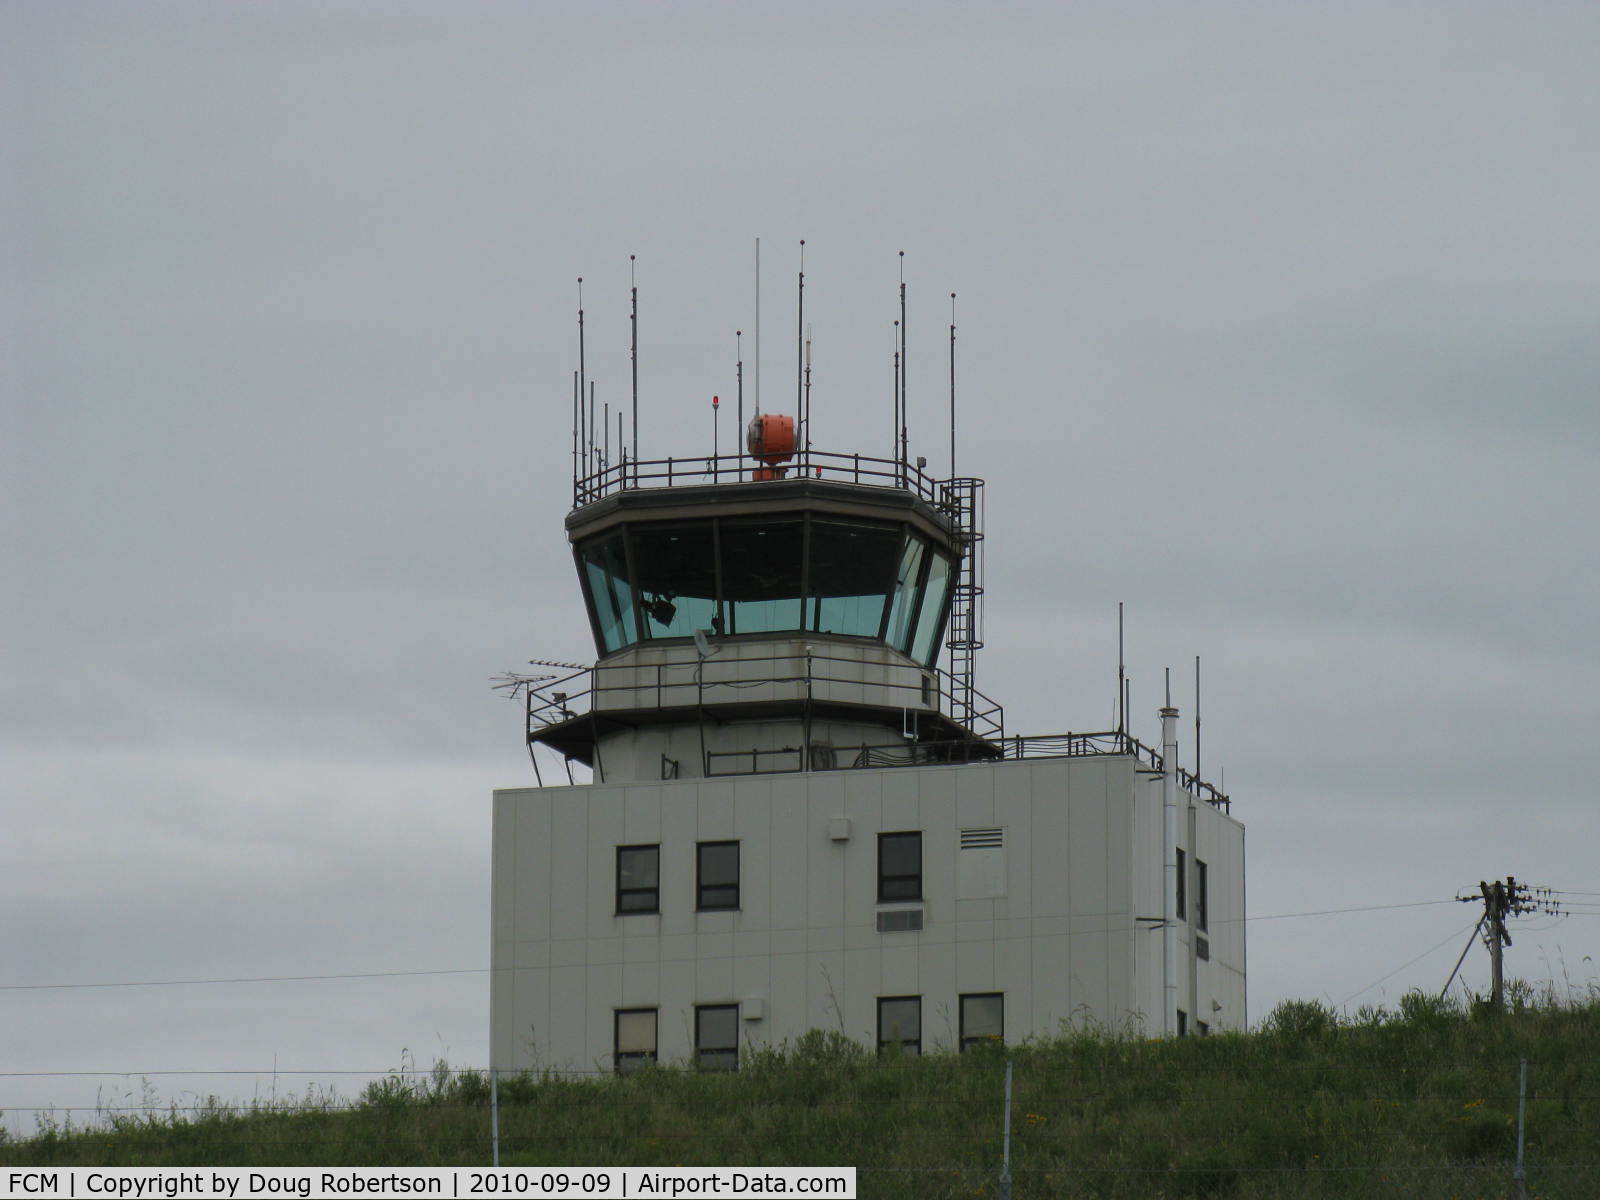 Flying Cloud Airport (FCM) - Flying Cloud Airport Air Traffic Control Tower